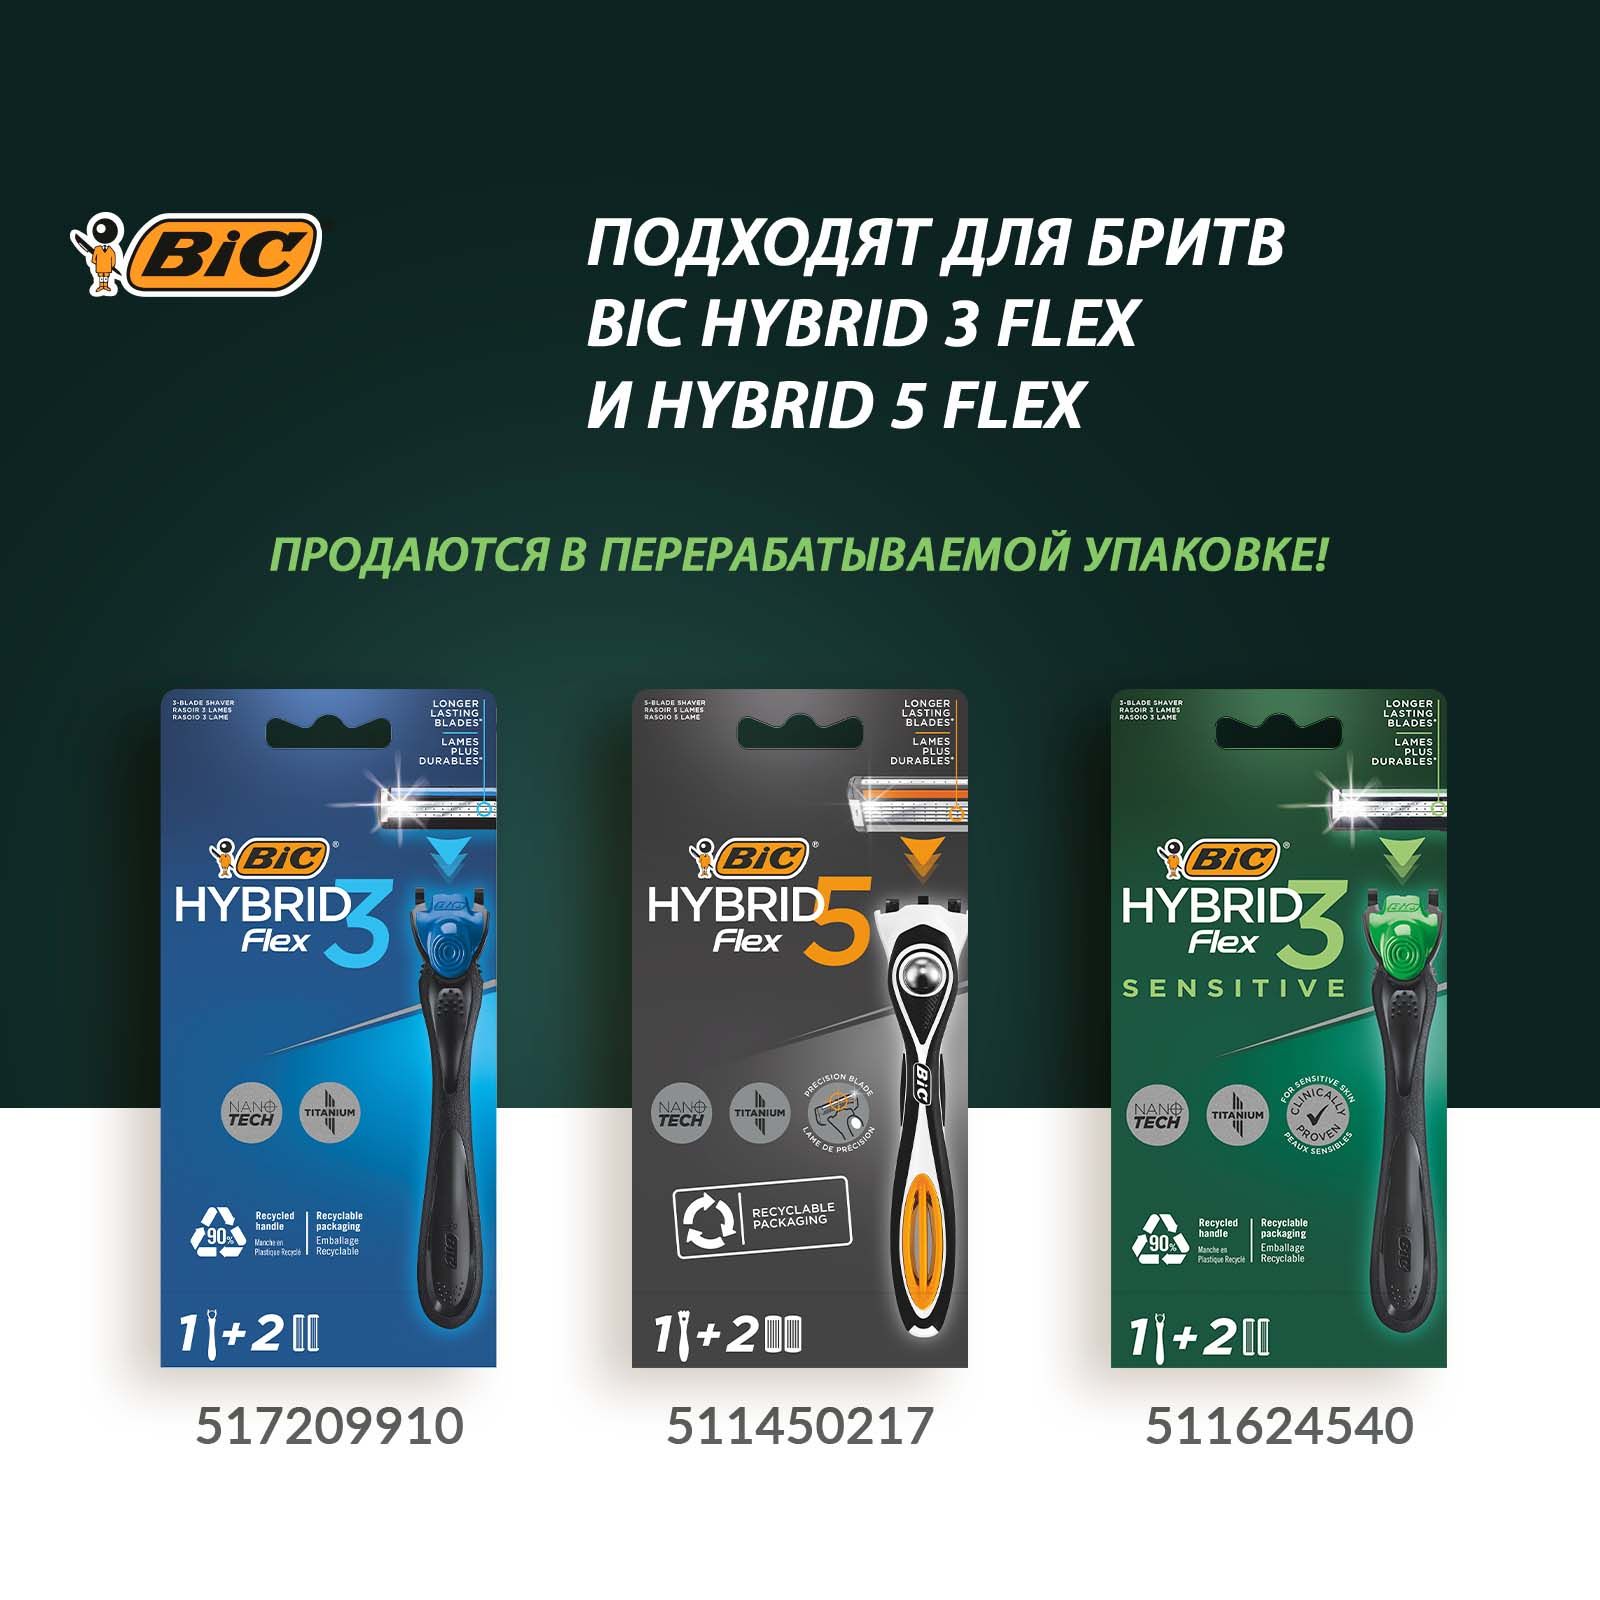 Кассеты flex 3. Hybrid 3 Flex кассеты. Hybrid Flex 3 кассеты крепления. Flex Hybrid. BIC_3216 - Video detail.